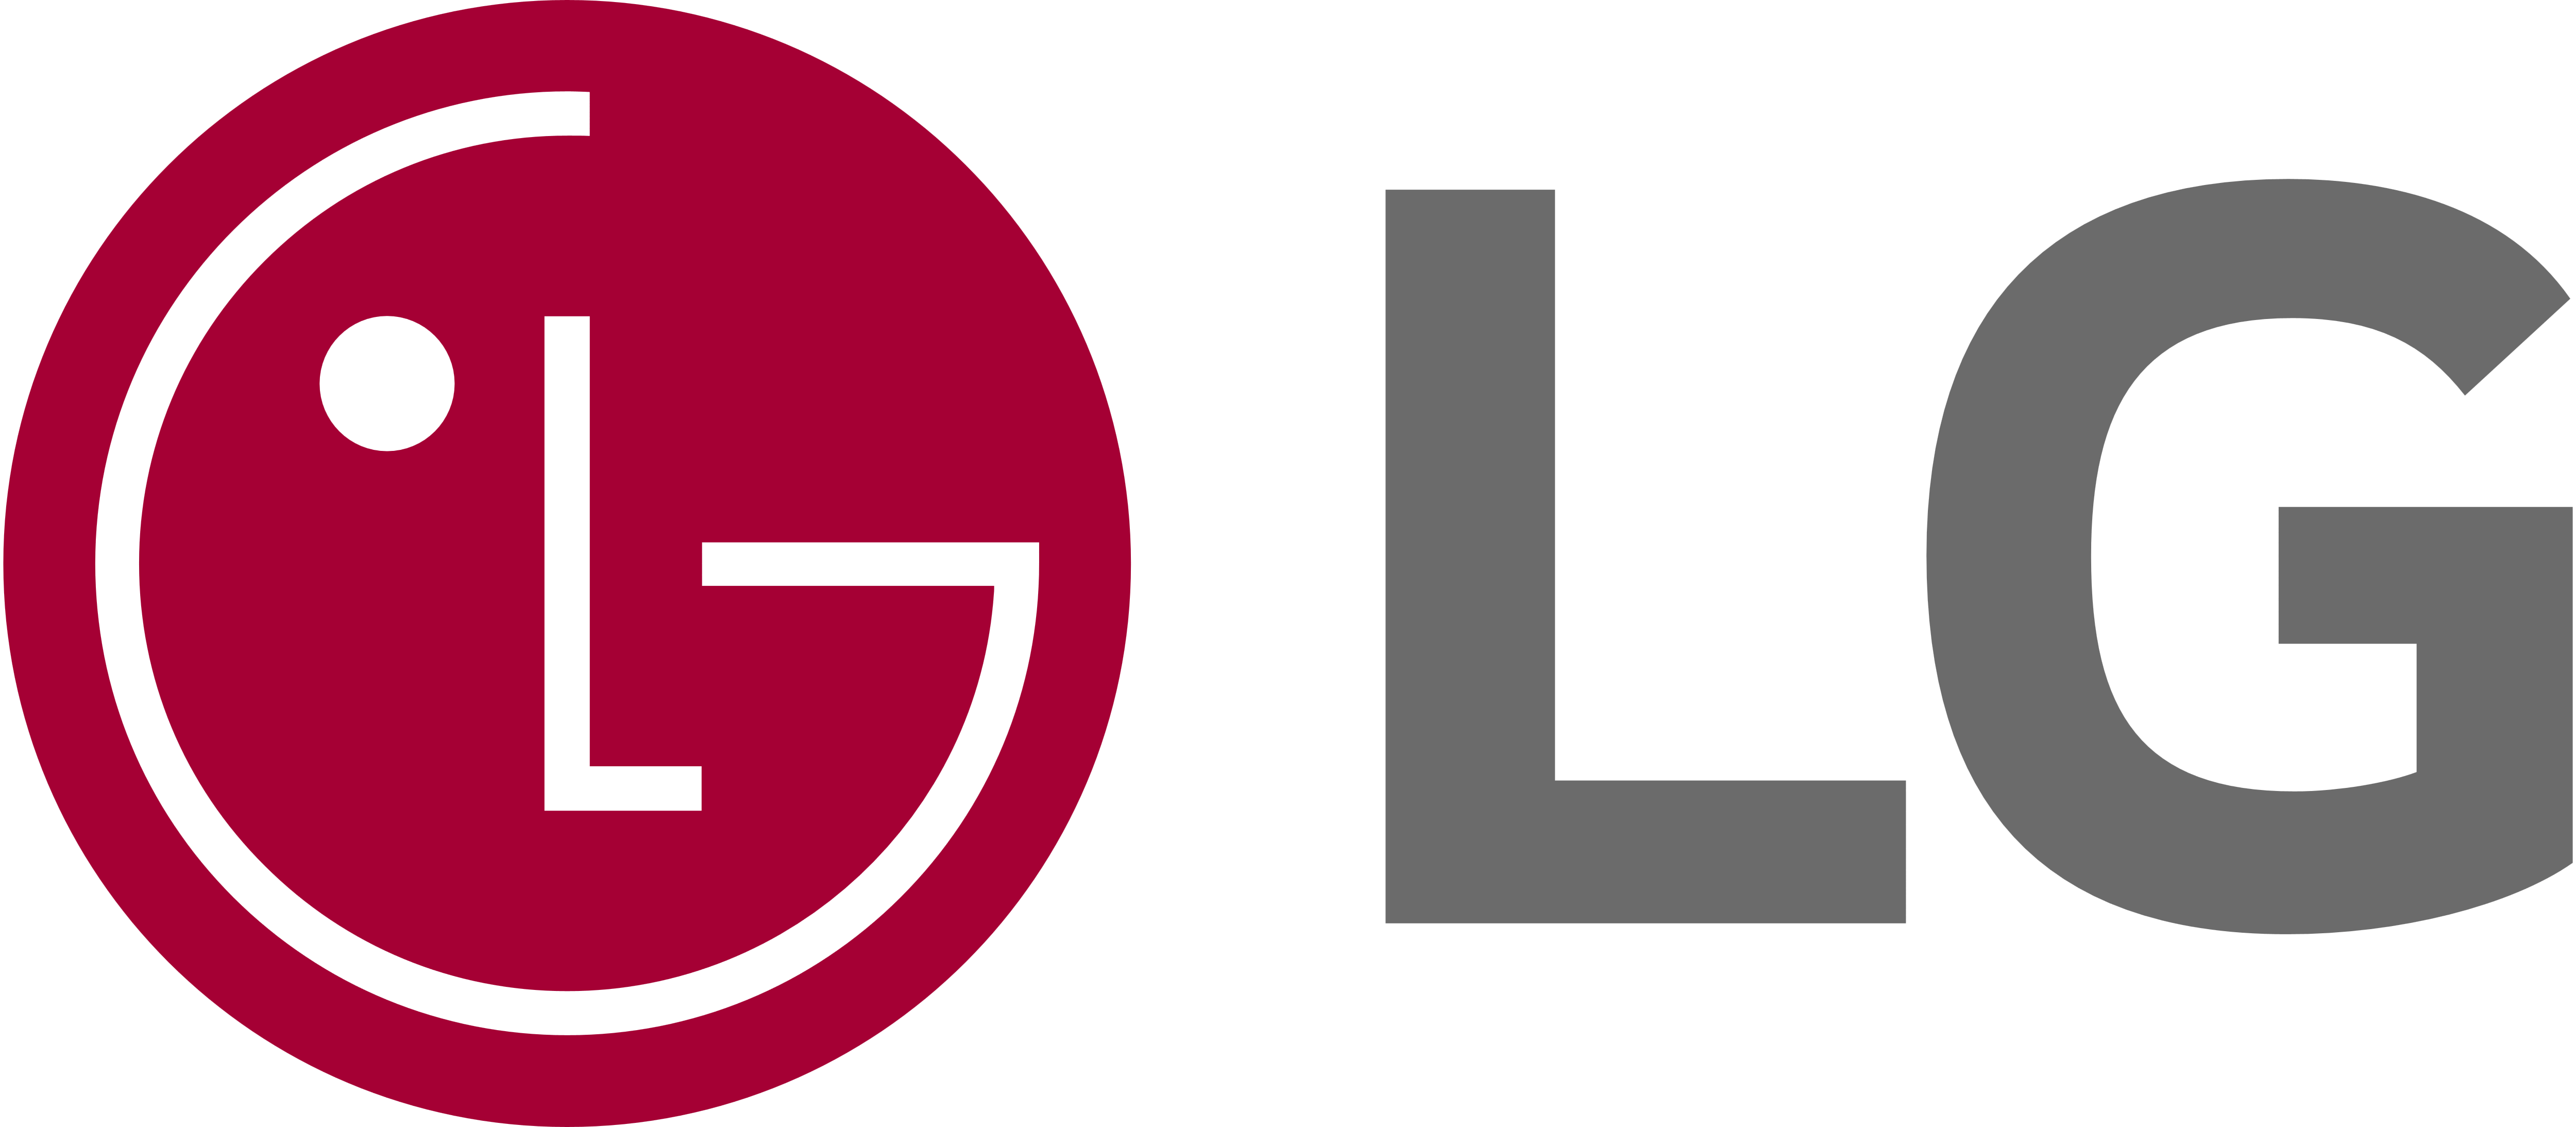 LG logo logotype emblem